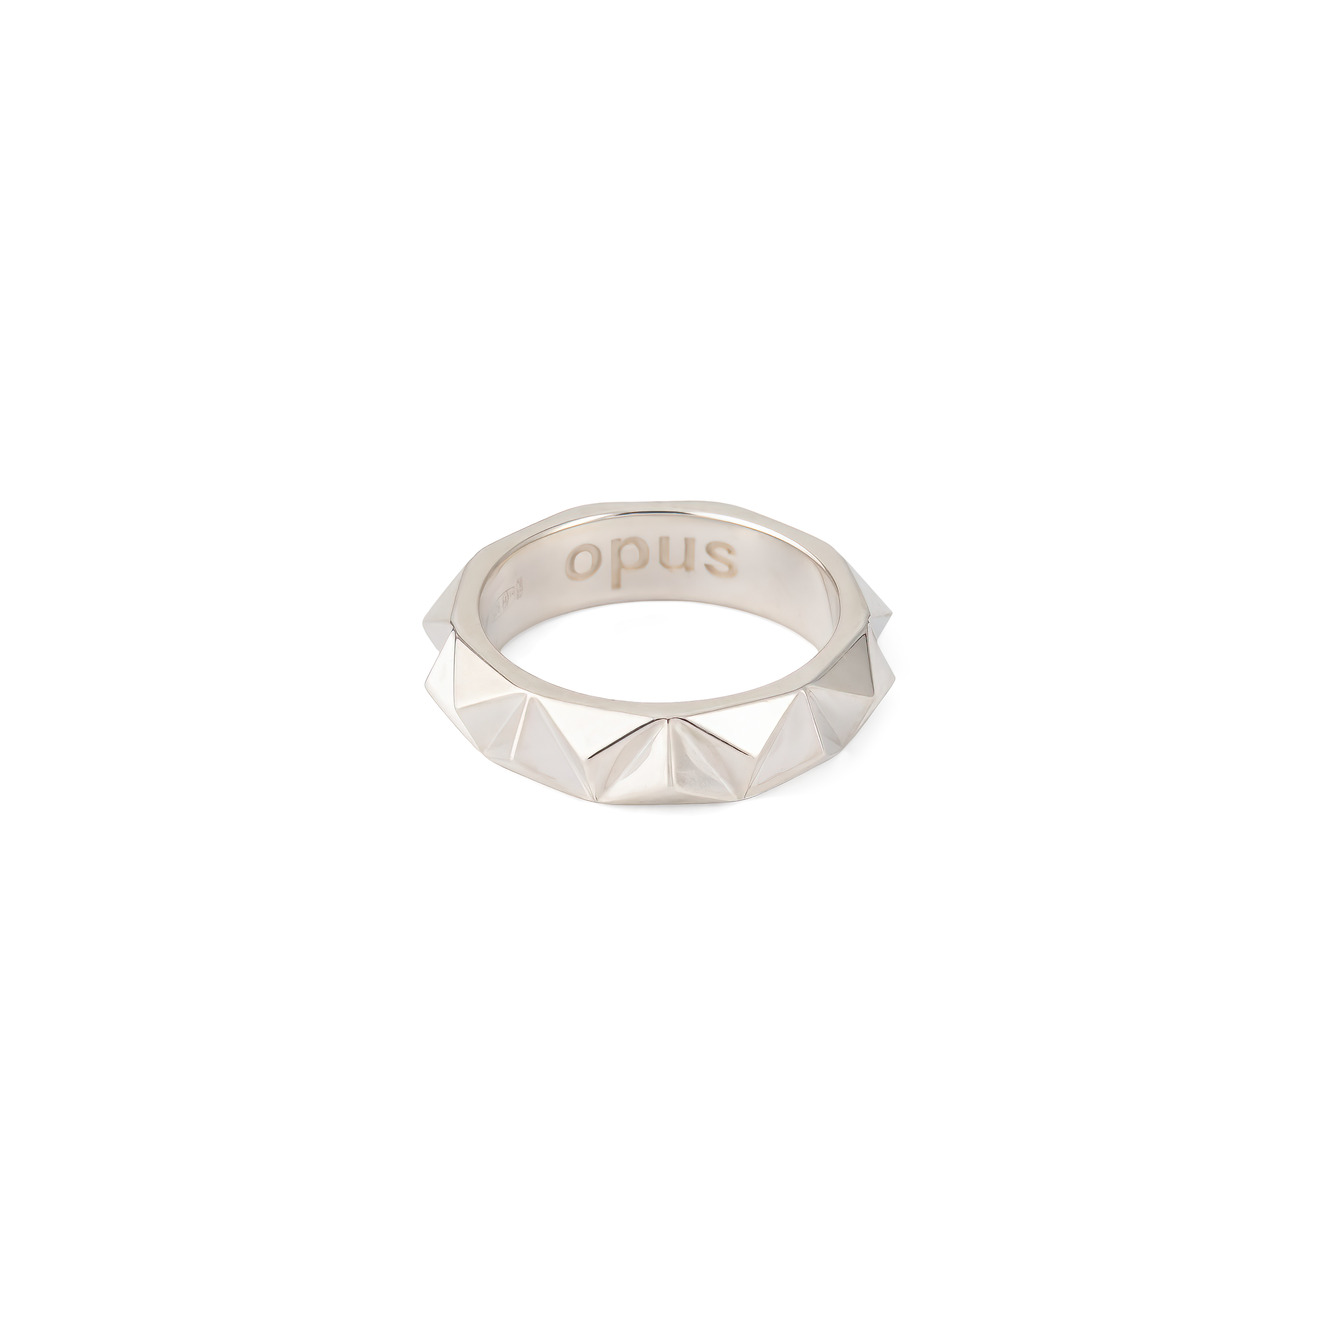 Opus Jewelry Кольцо из серебра с гранями Razor Band Ring 5 мм